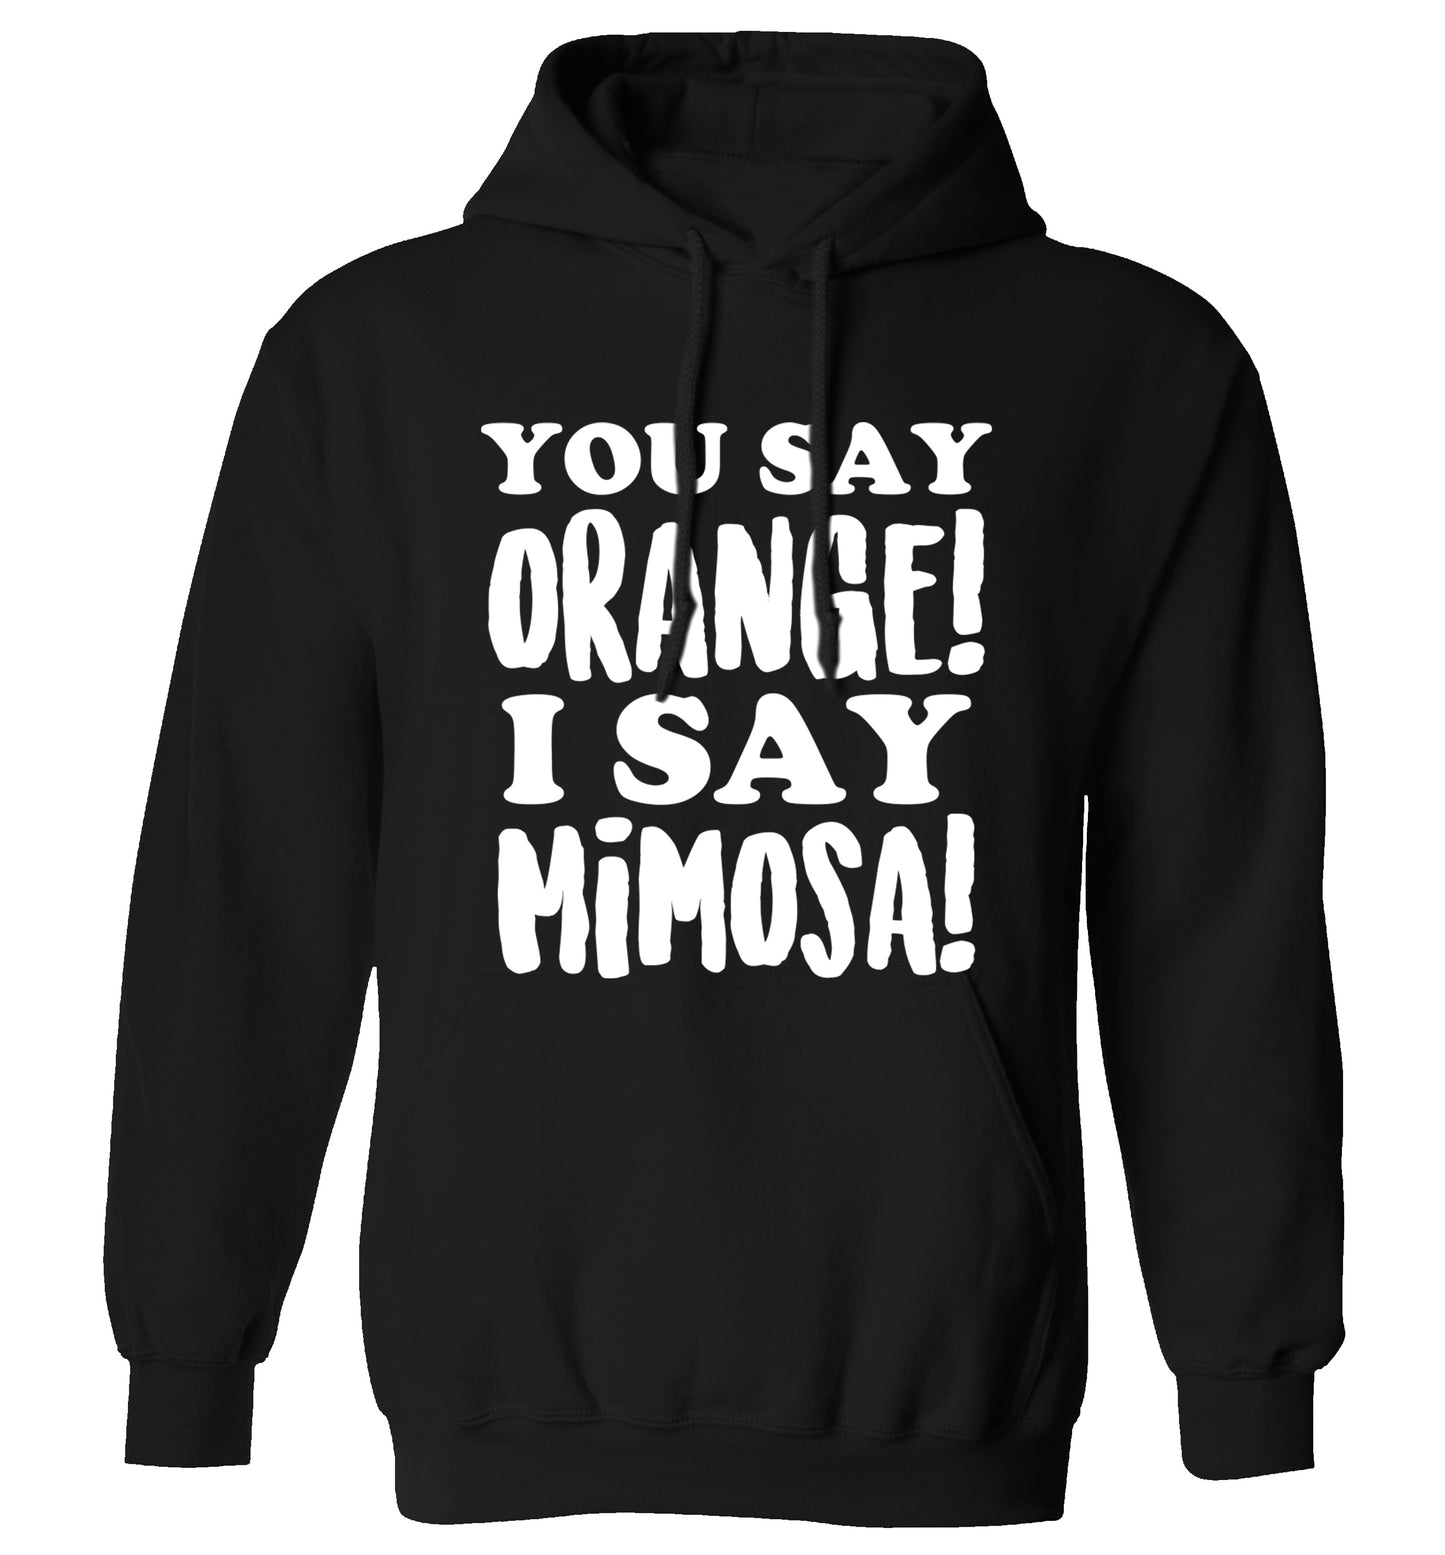 You say orange I say mimosa! adults unisex black hoodie 2XL